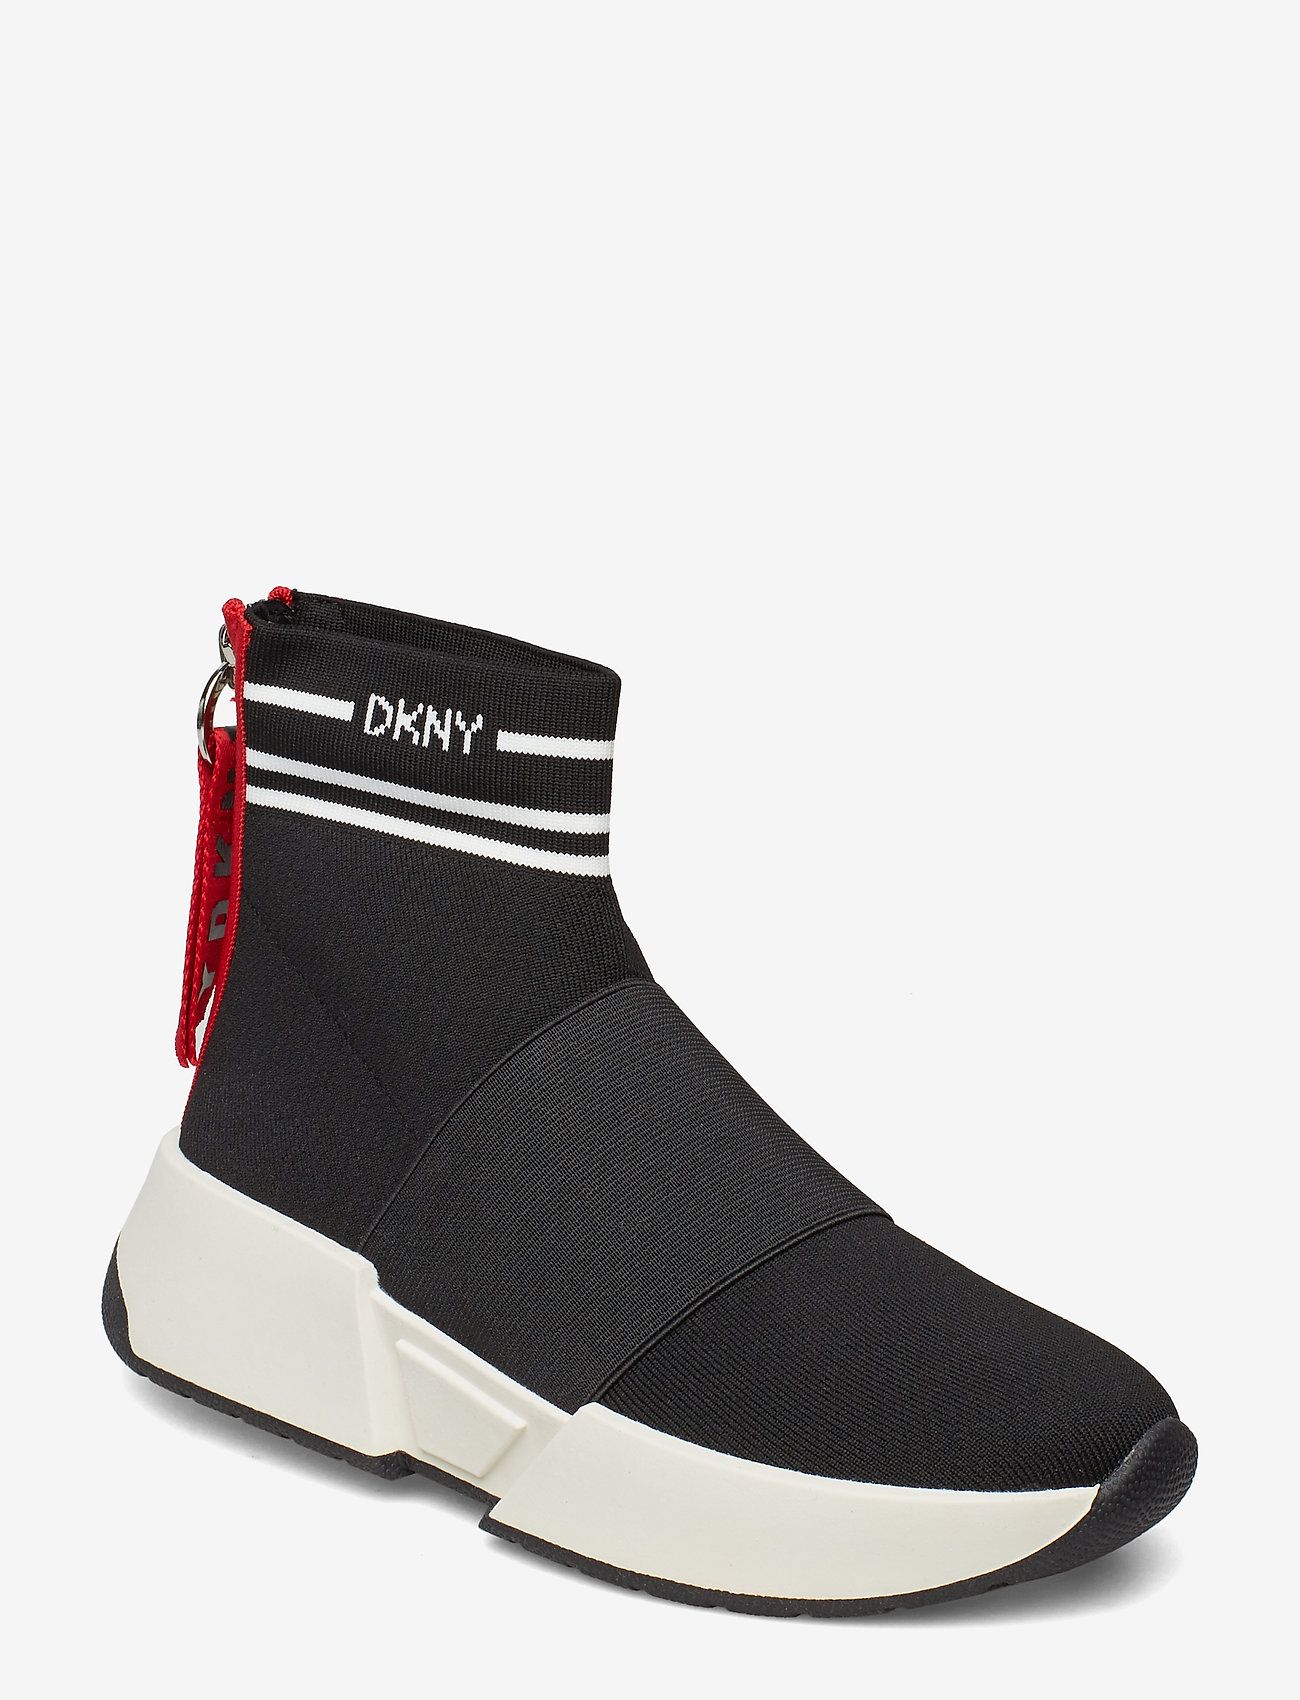 DKNY Marini - High top sneakers | Boozt.com